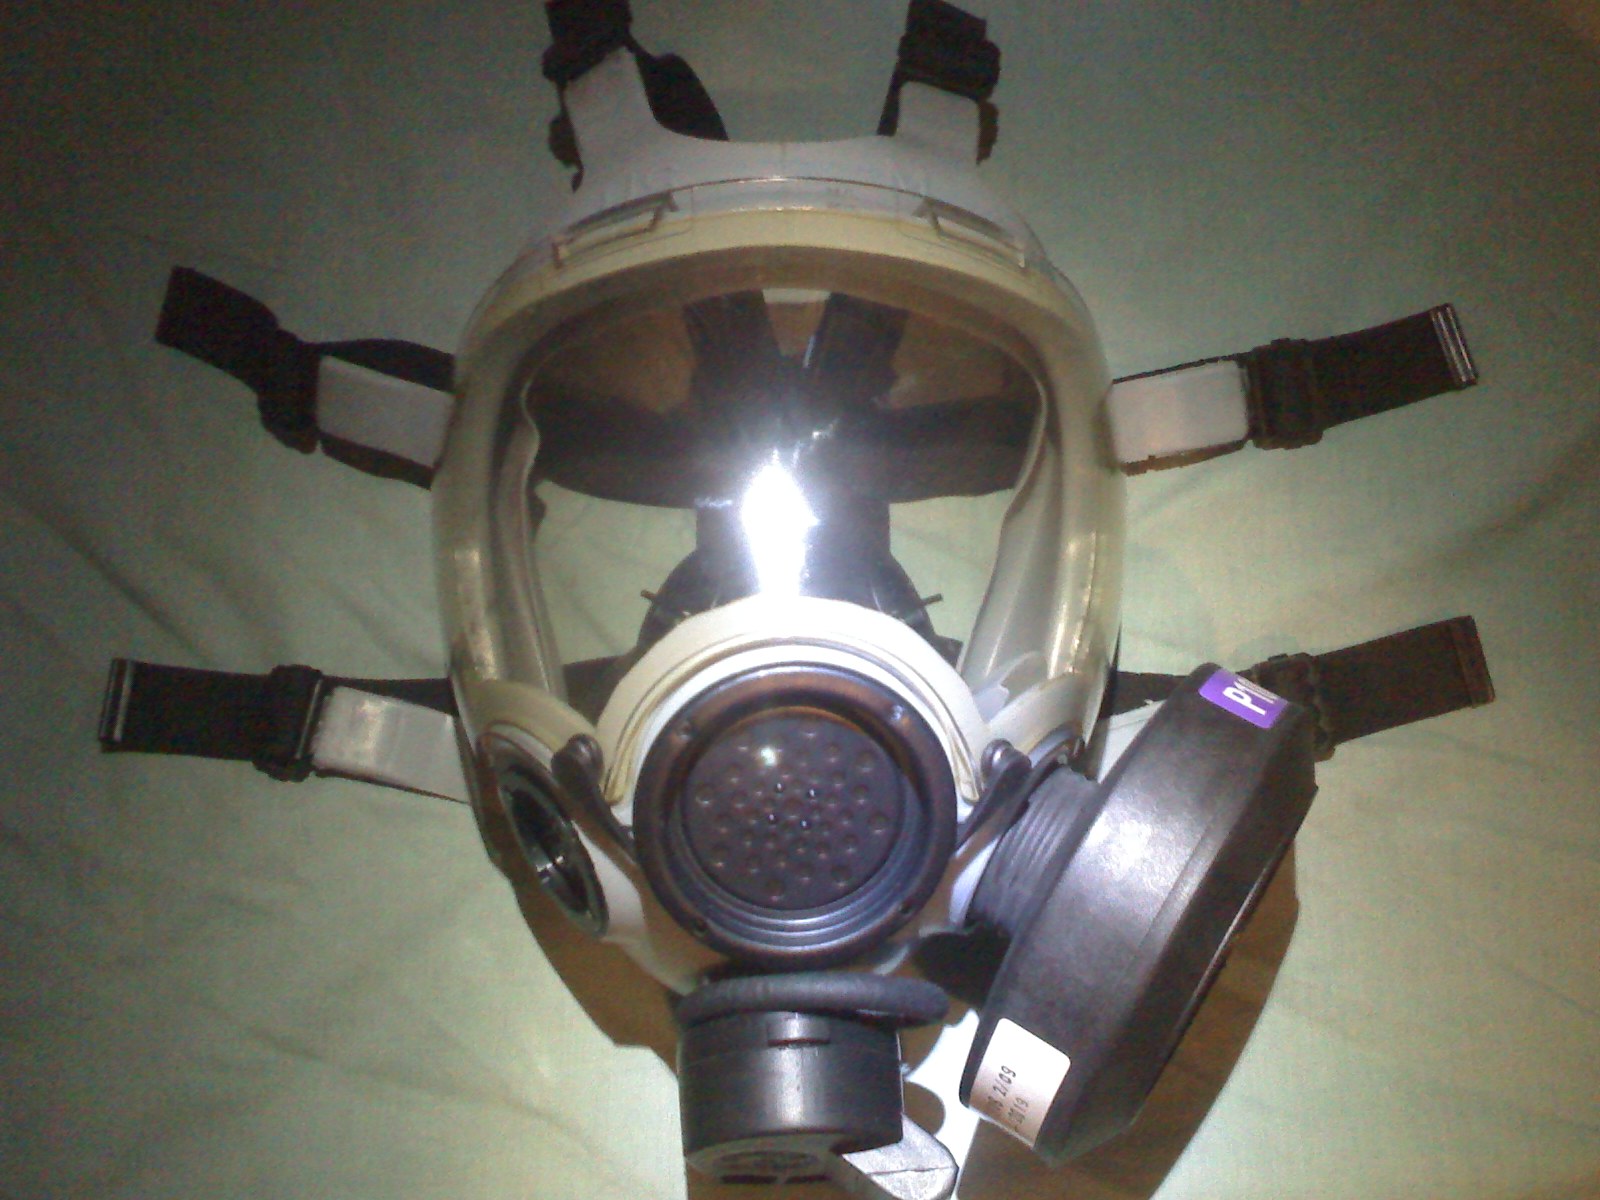 msa millennium gas mask